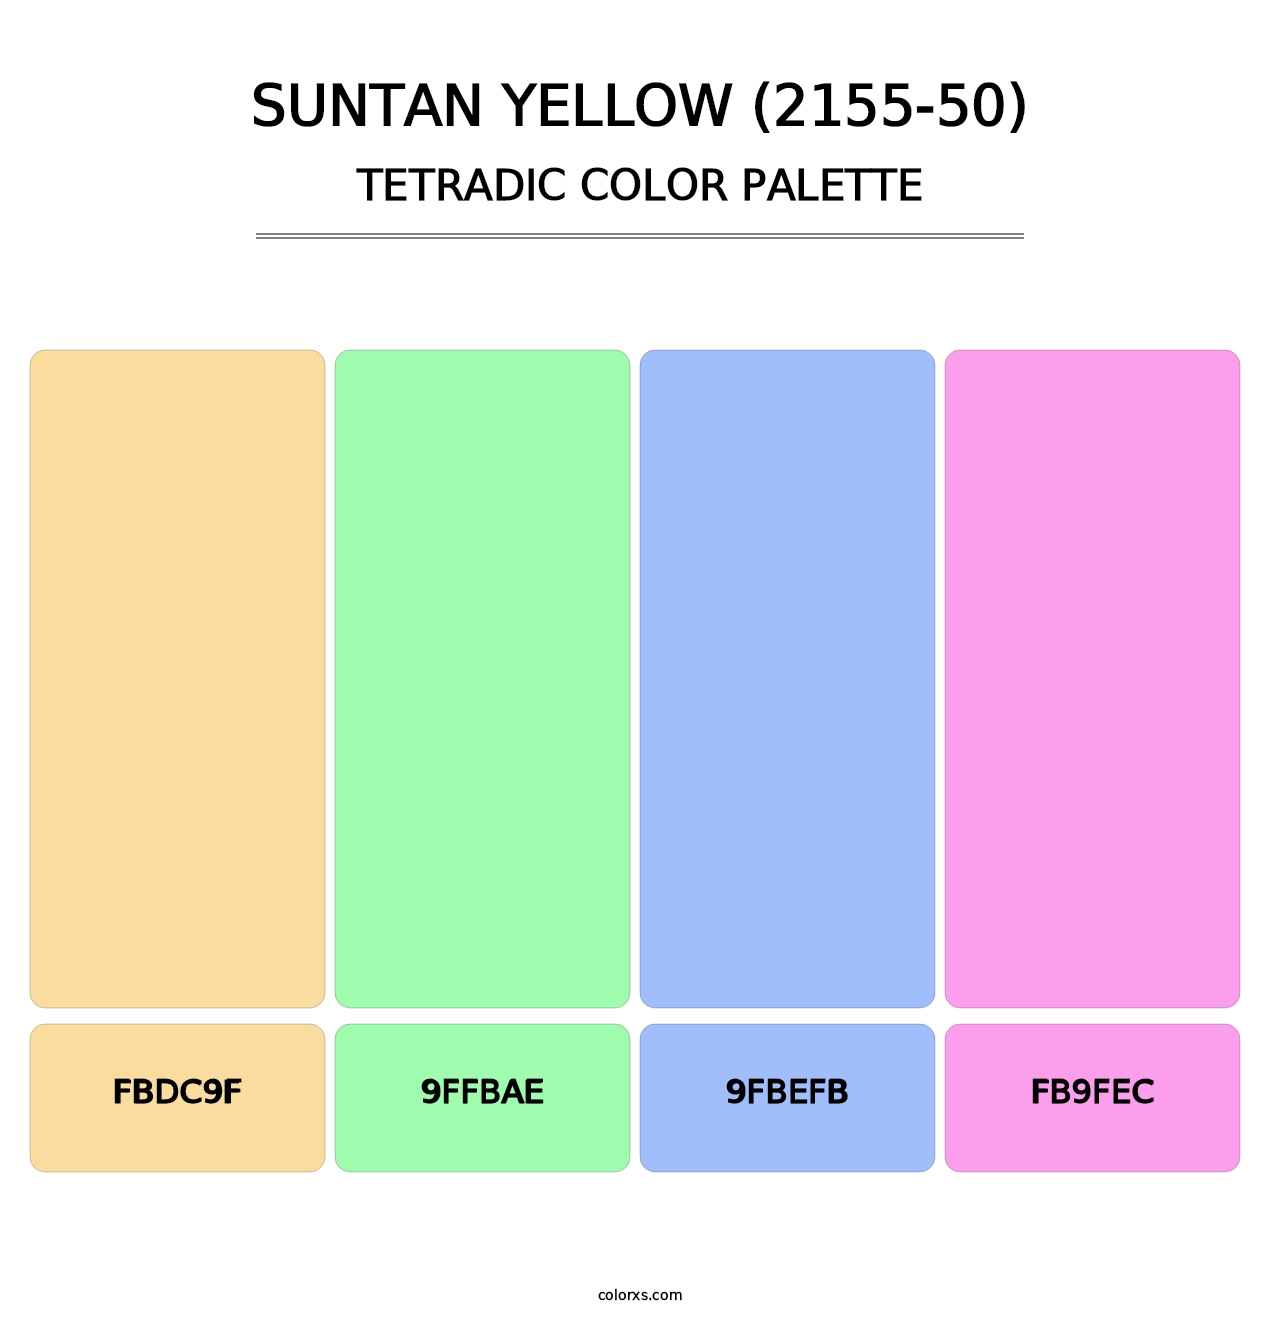 Suntan Yellow (2155-50) - Tetradic Color Palette